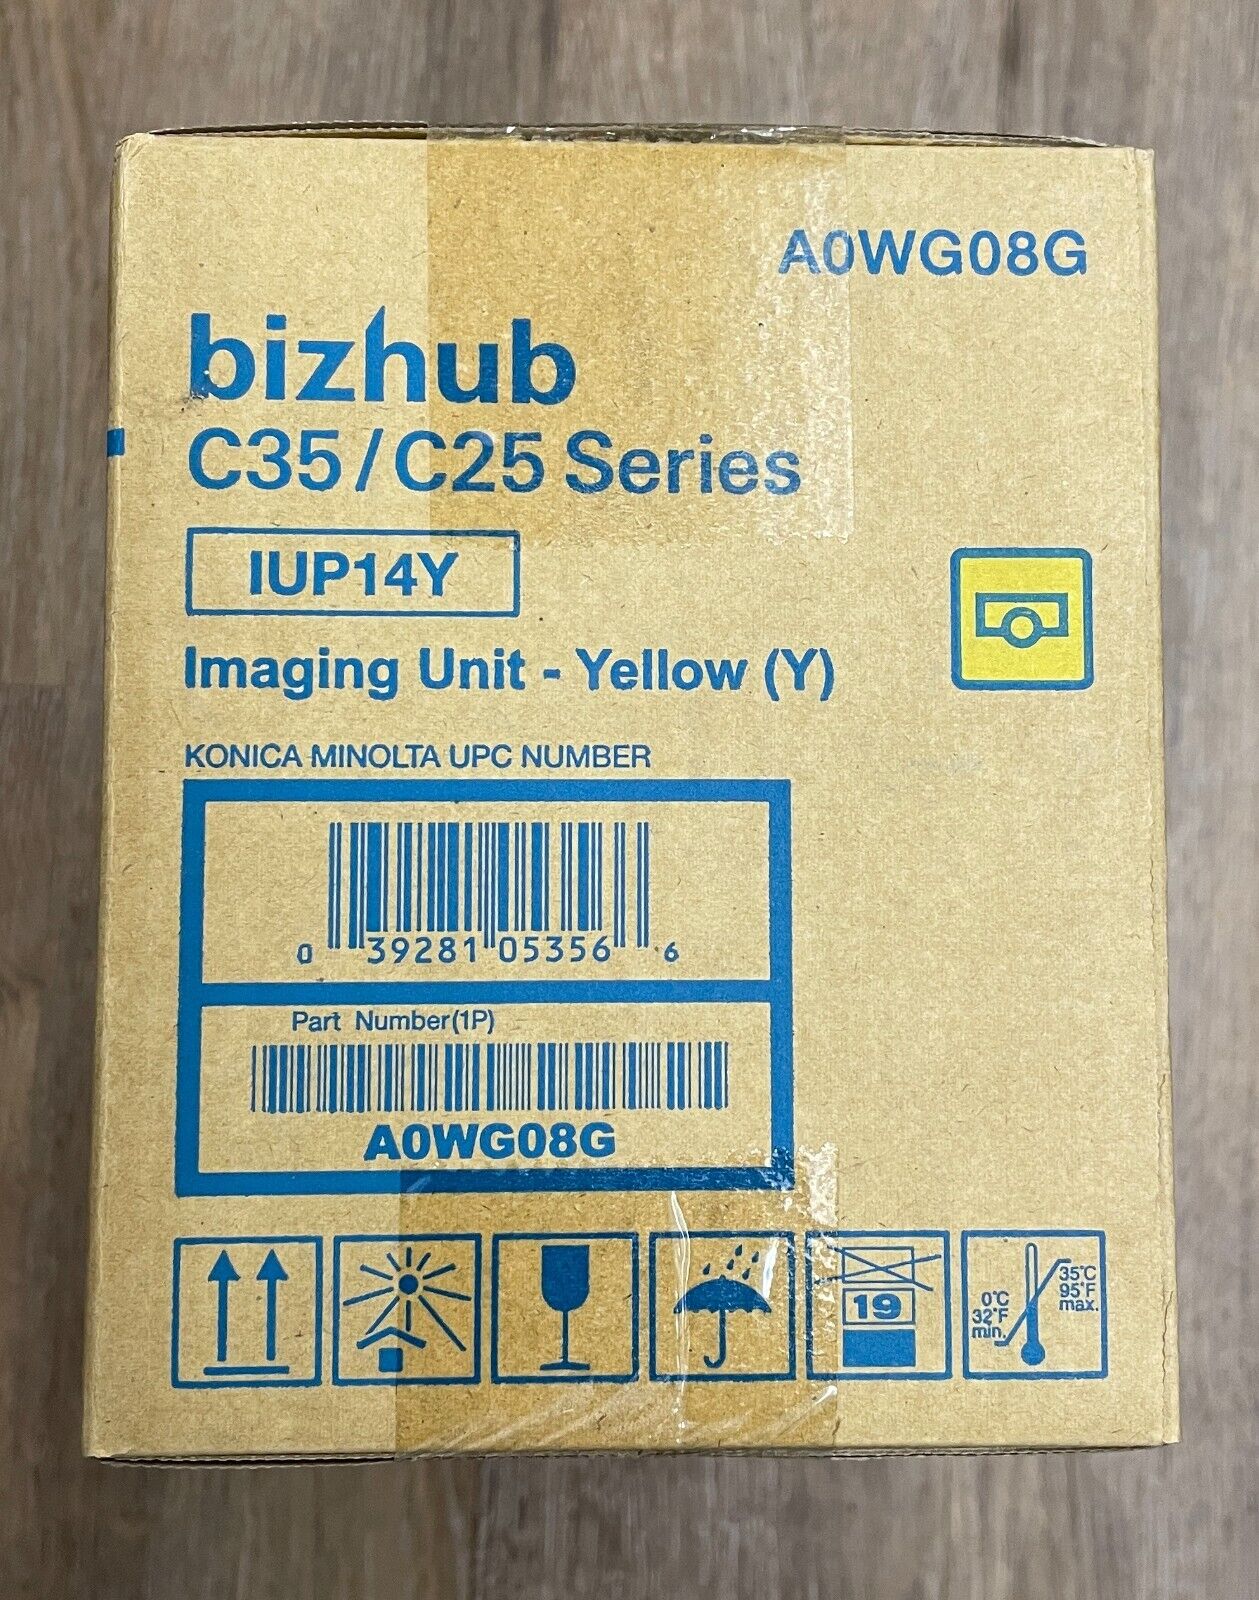 Genuine New Konica Minolta A0WG08G IUP14Y Yellow Imaging Unit for C35 C25 Series